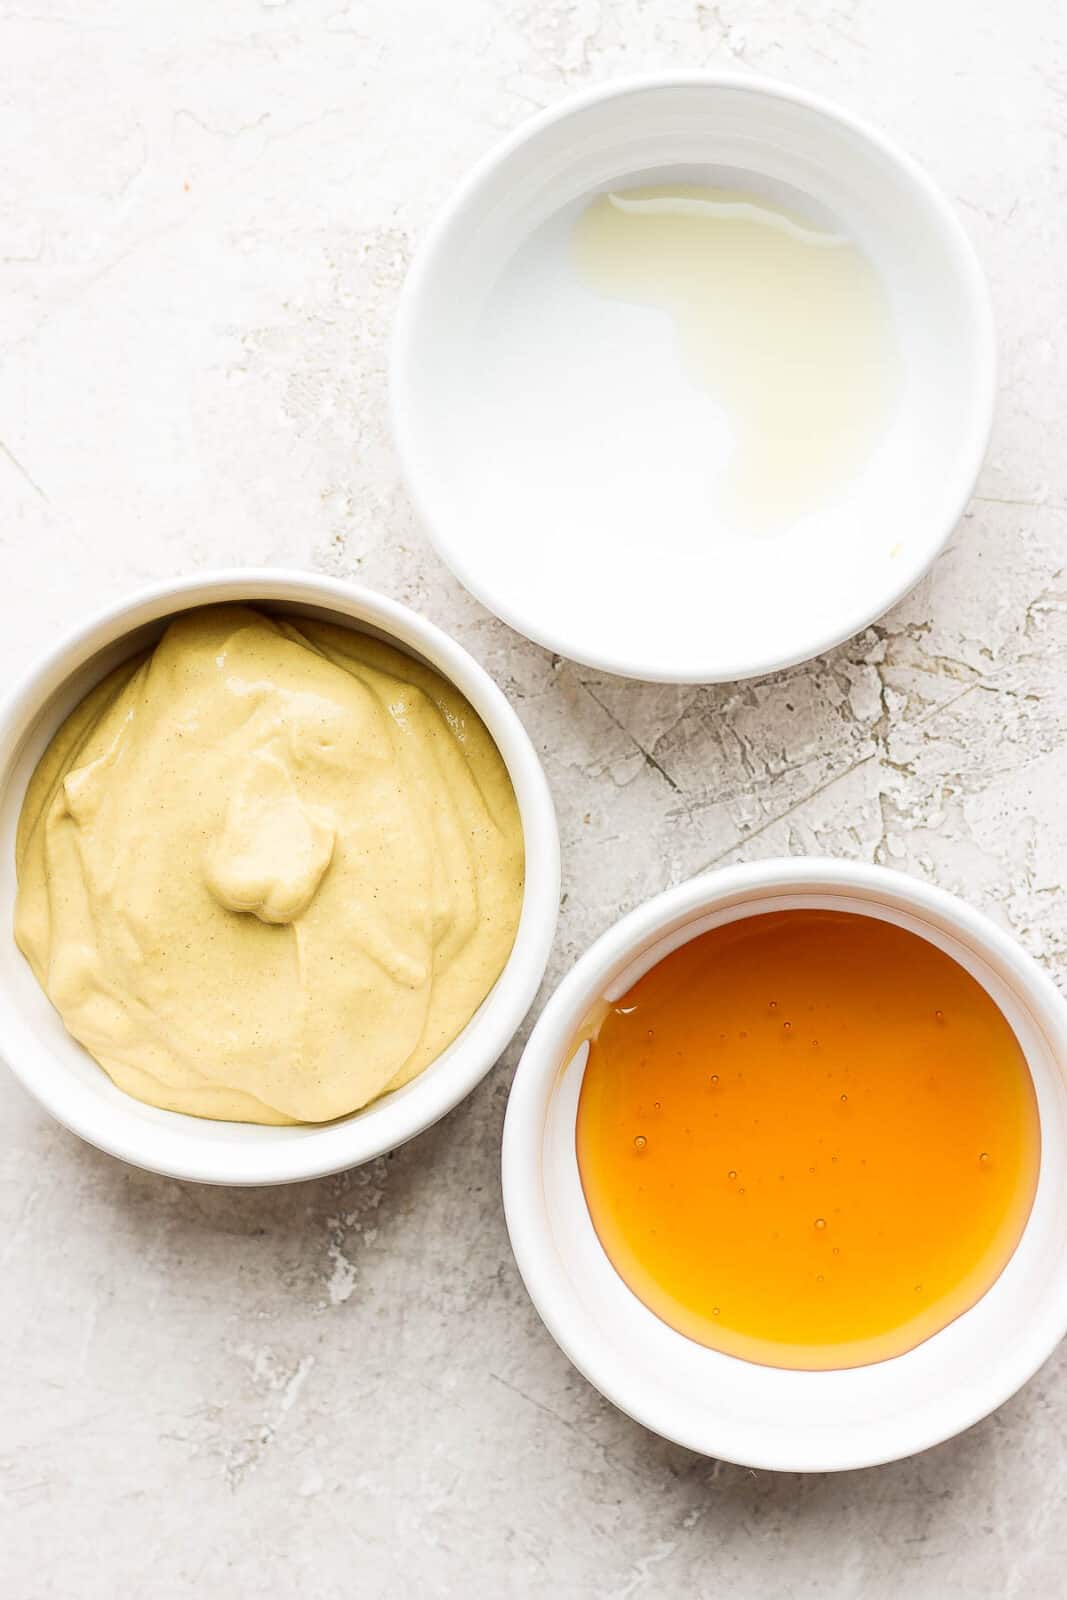 Ingredients for honey mustard in separate bowls.